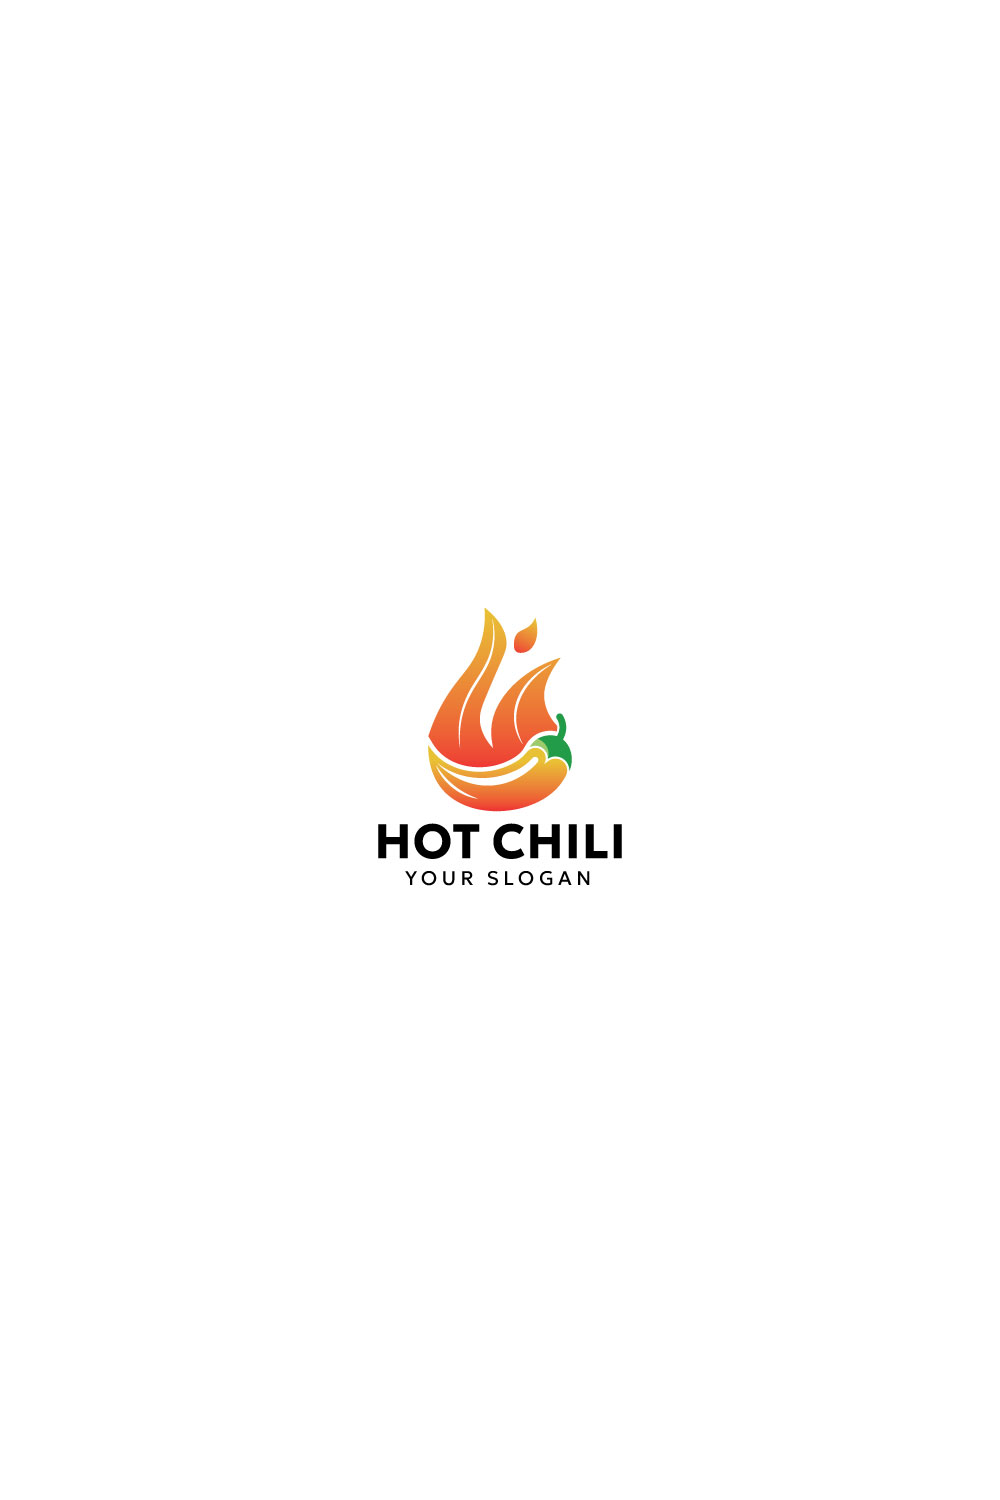 Hot chili fire logo design pinterest preview image.